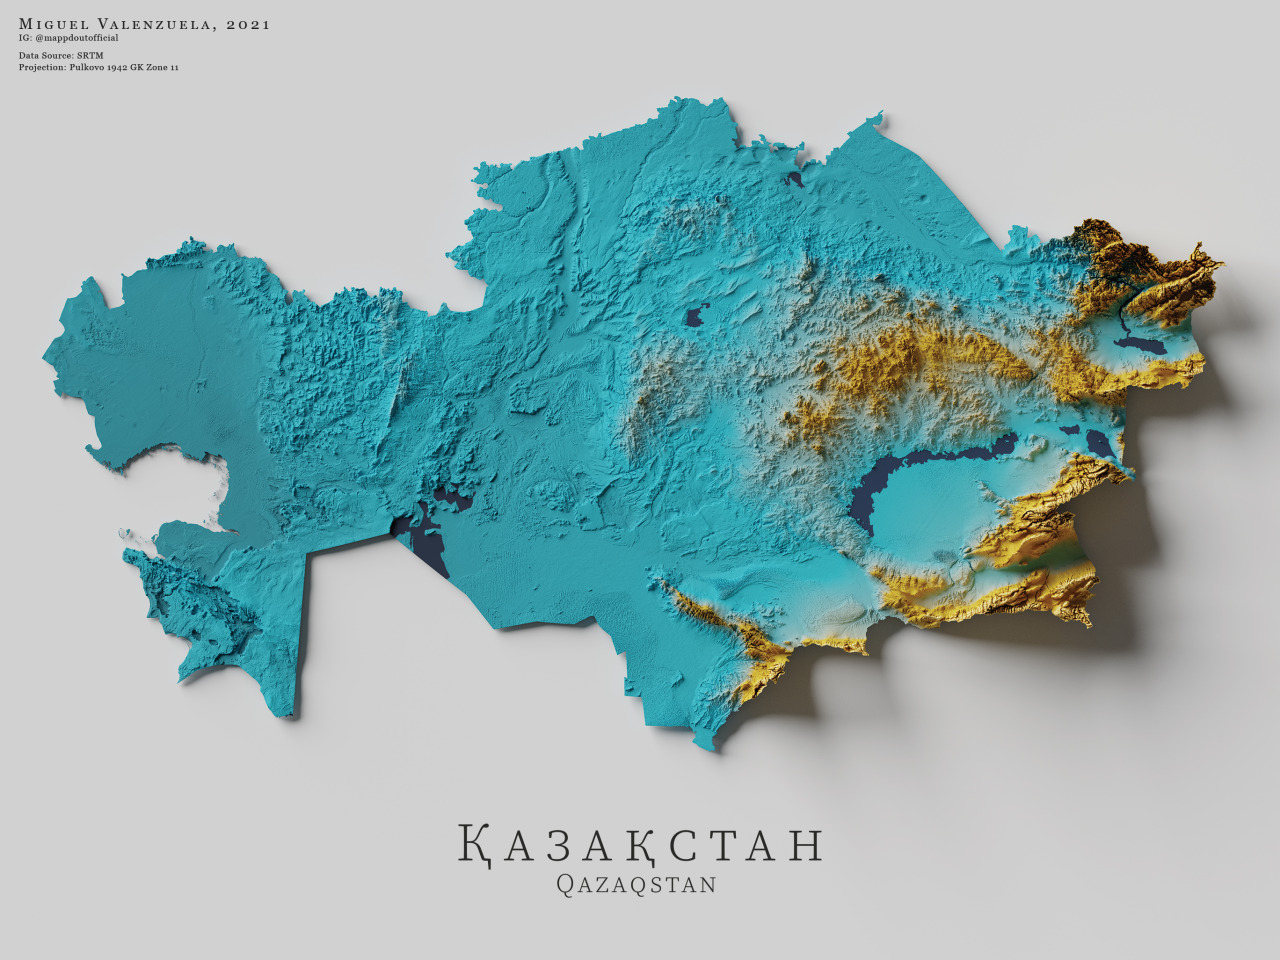 the topography of kazakhstan by mappdoutofficial #maps #kazakhstan # ...